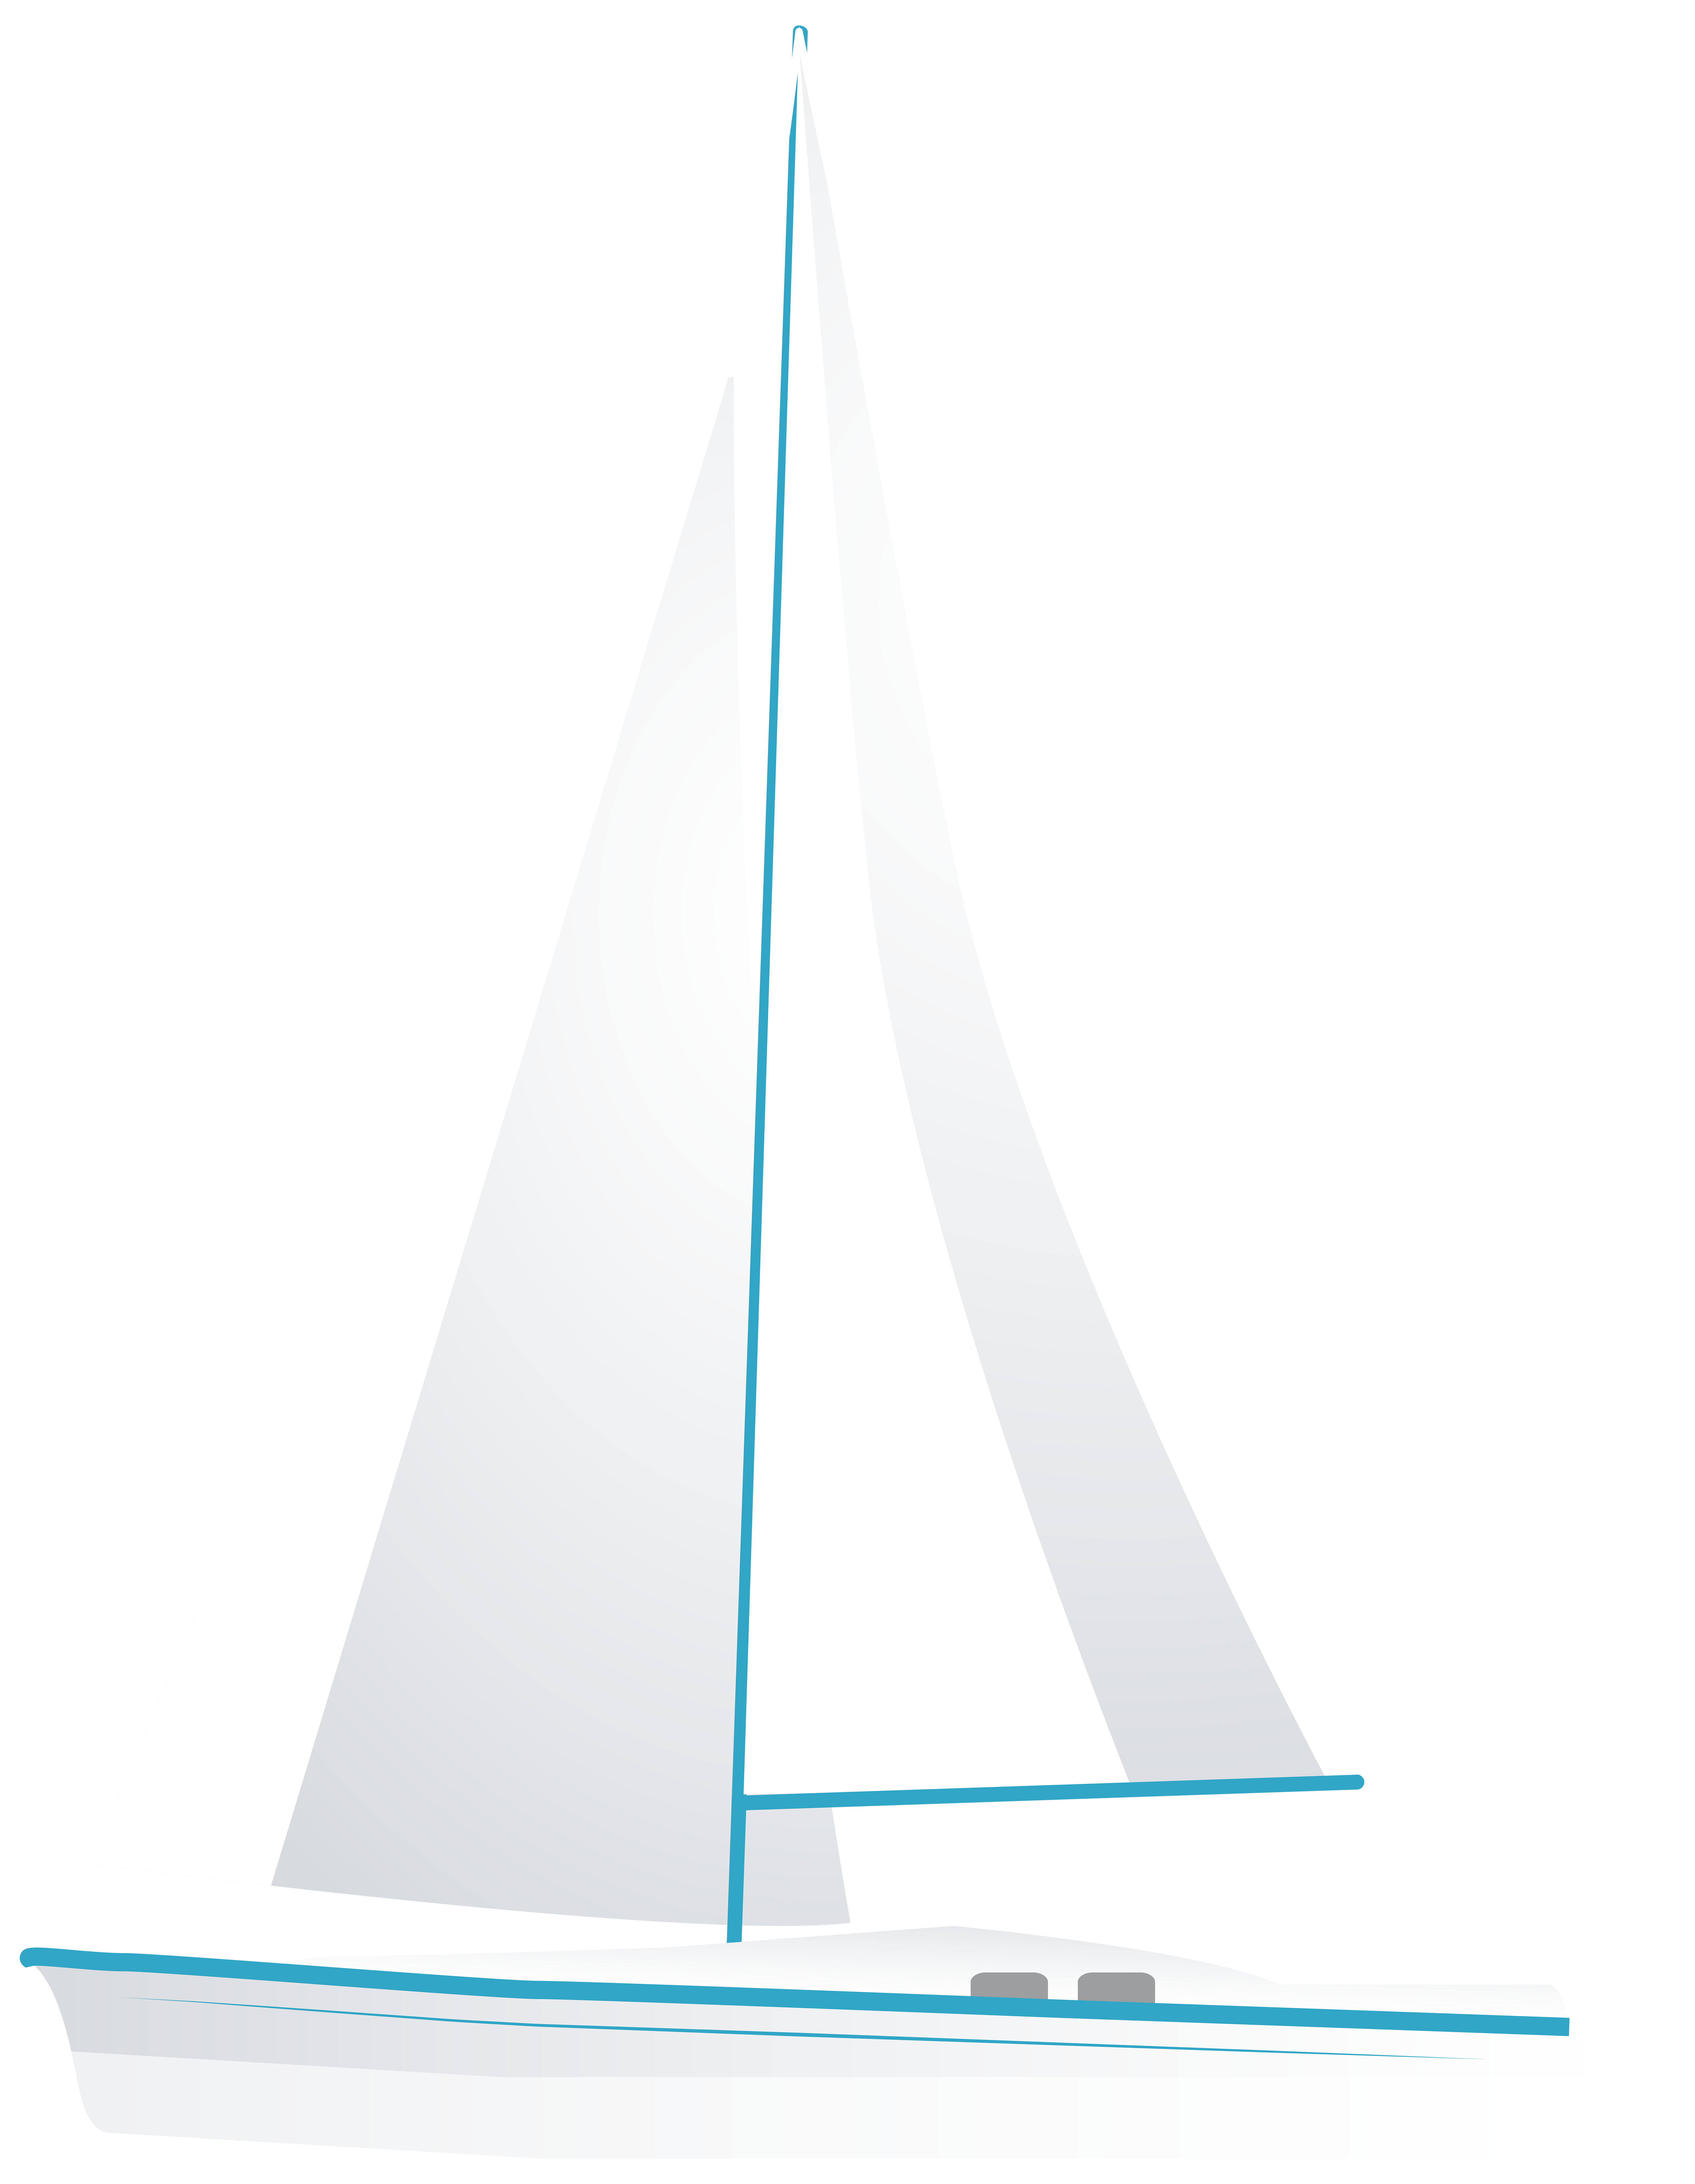 sailing black and white clip art